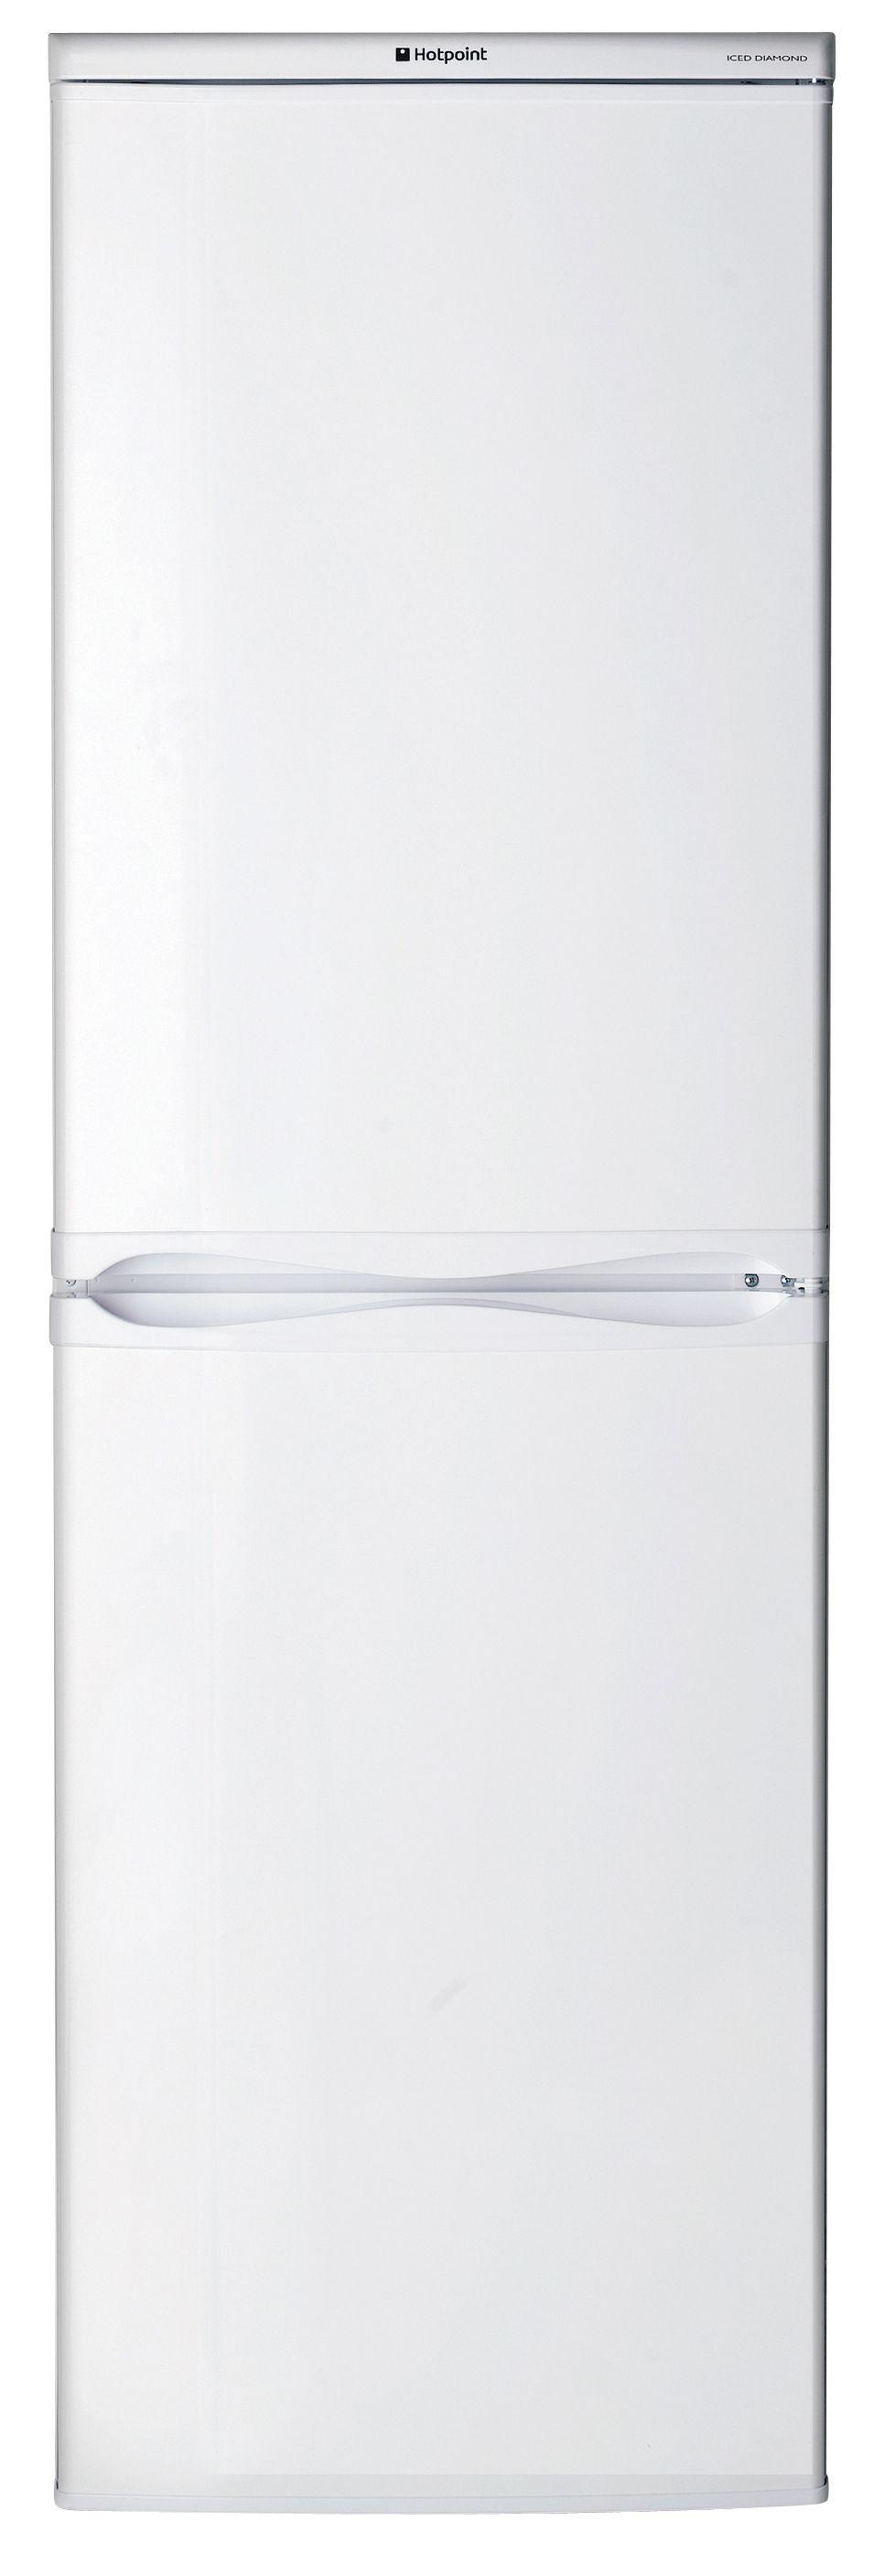 14+ Hotpoint fridge freezer keeps tripping electric ideas